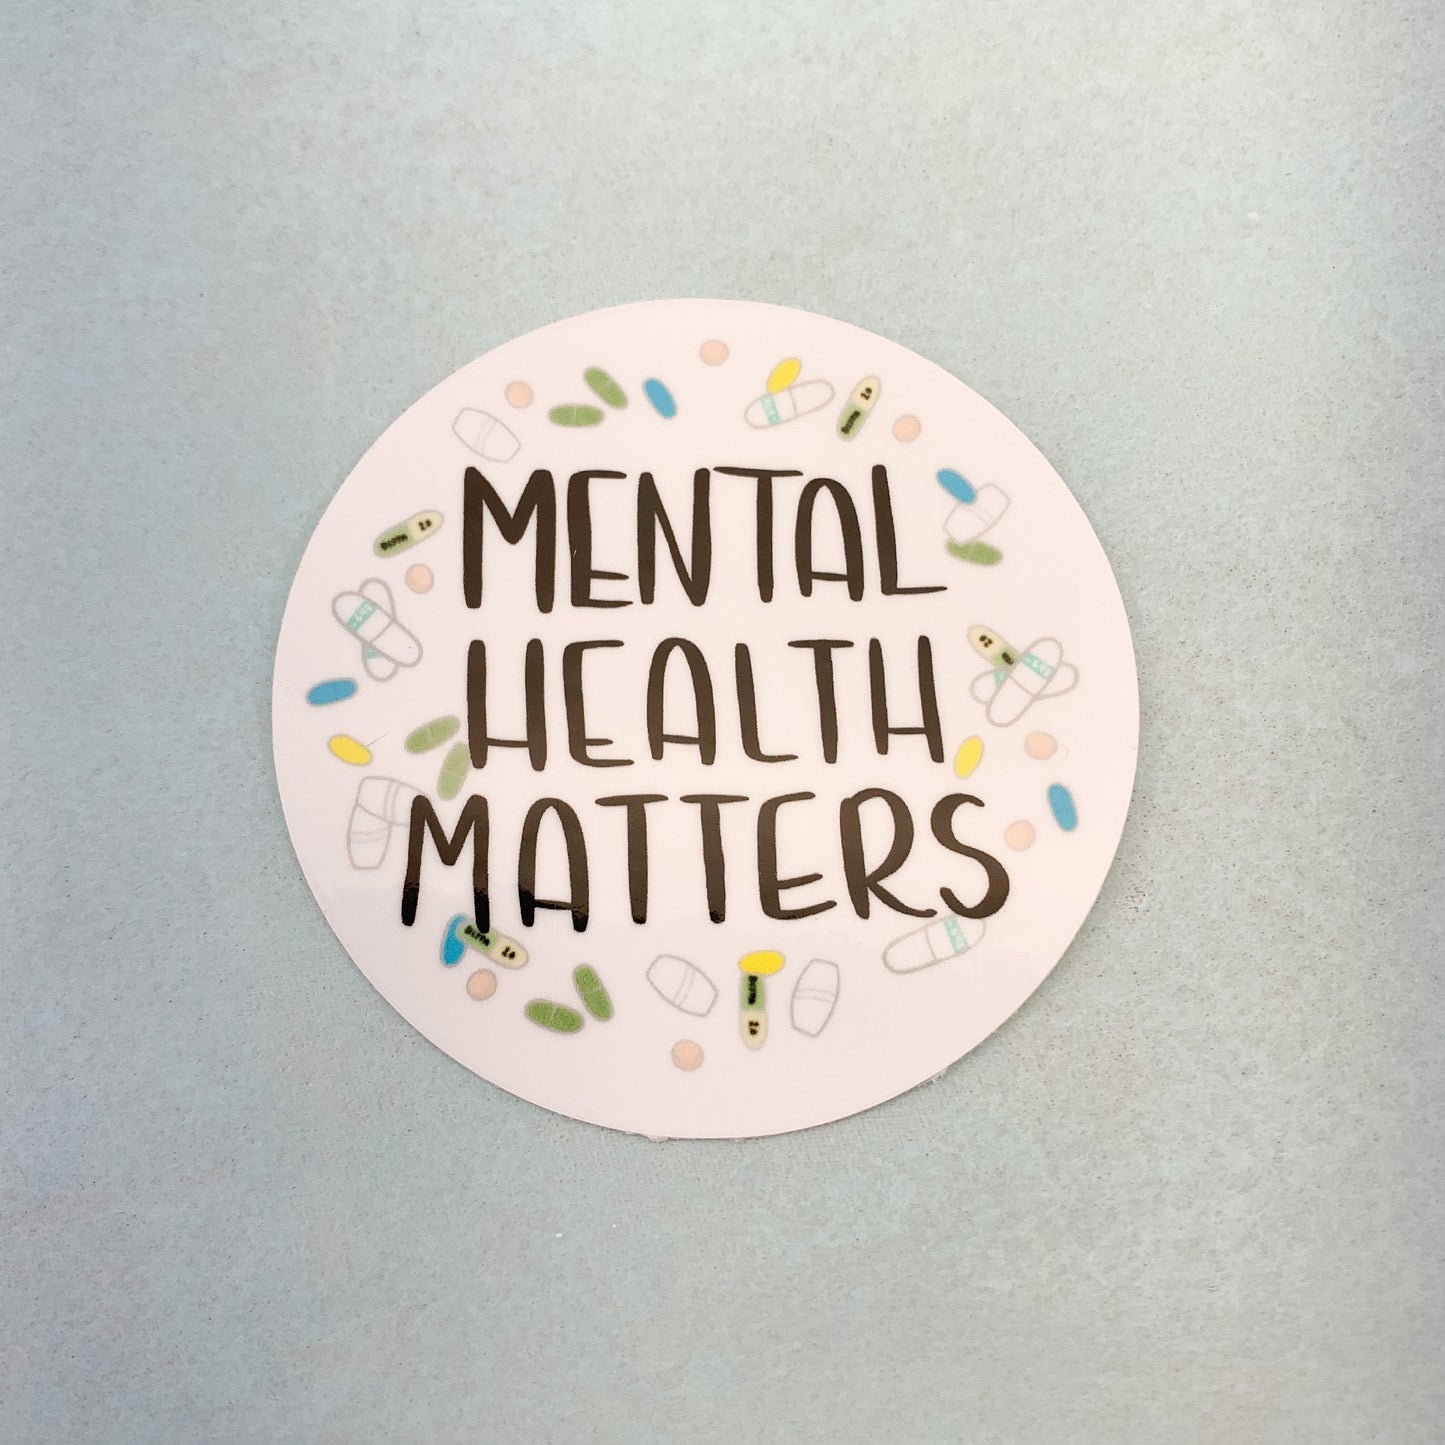 Mental Health Matters Sticker - Mental Health Awareness - Vinyl Sticker Waterproof decal